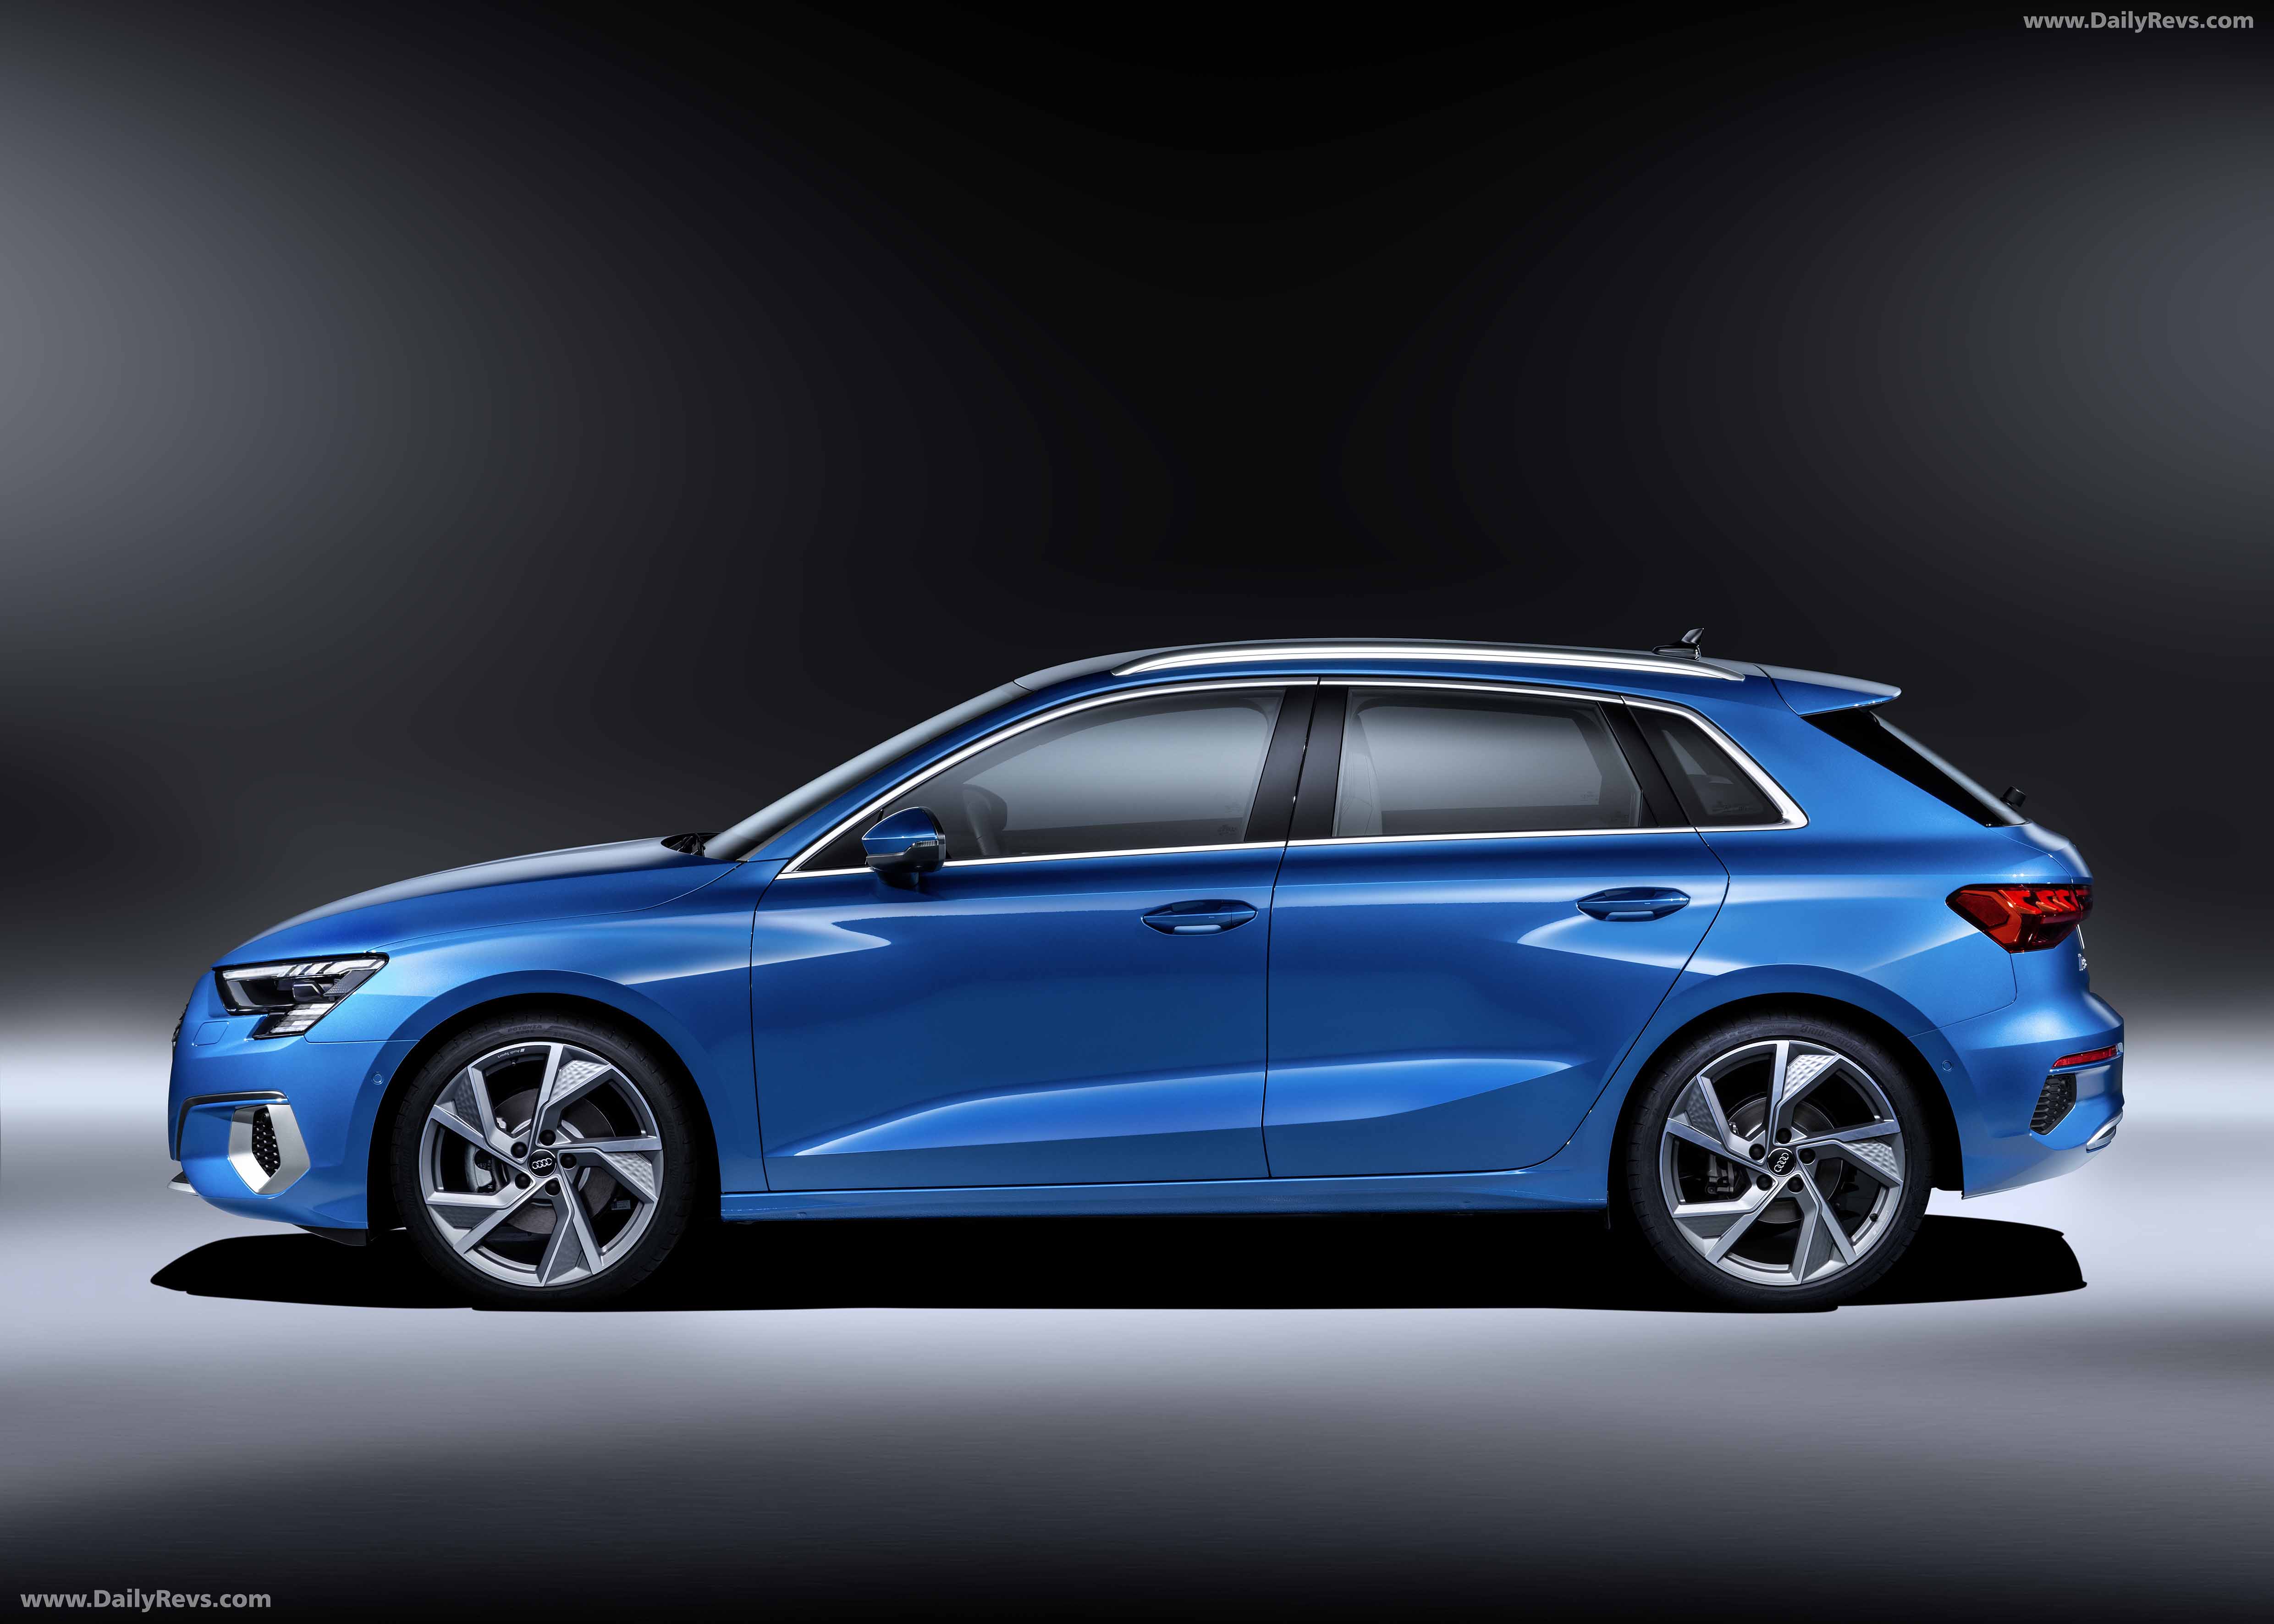 2021 Audi A3 Sportback - HD Pictures, Videos, Specs ...